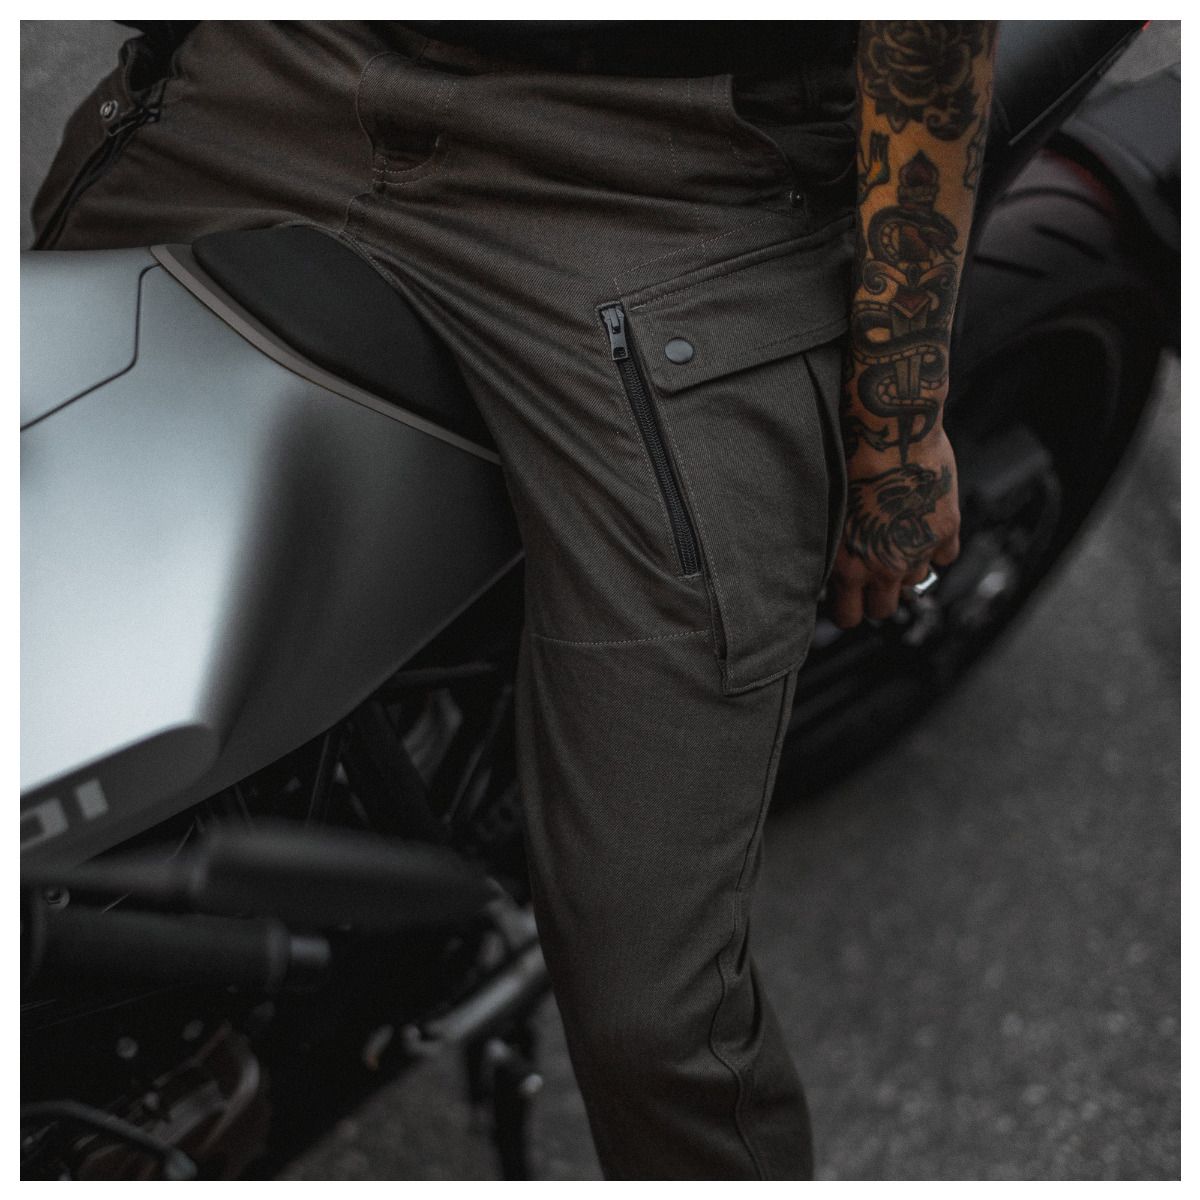 Pando Moto Mark Kev 02 Jeans, Length 30 - Olive Green - Motofever